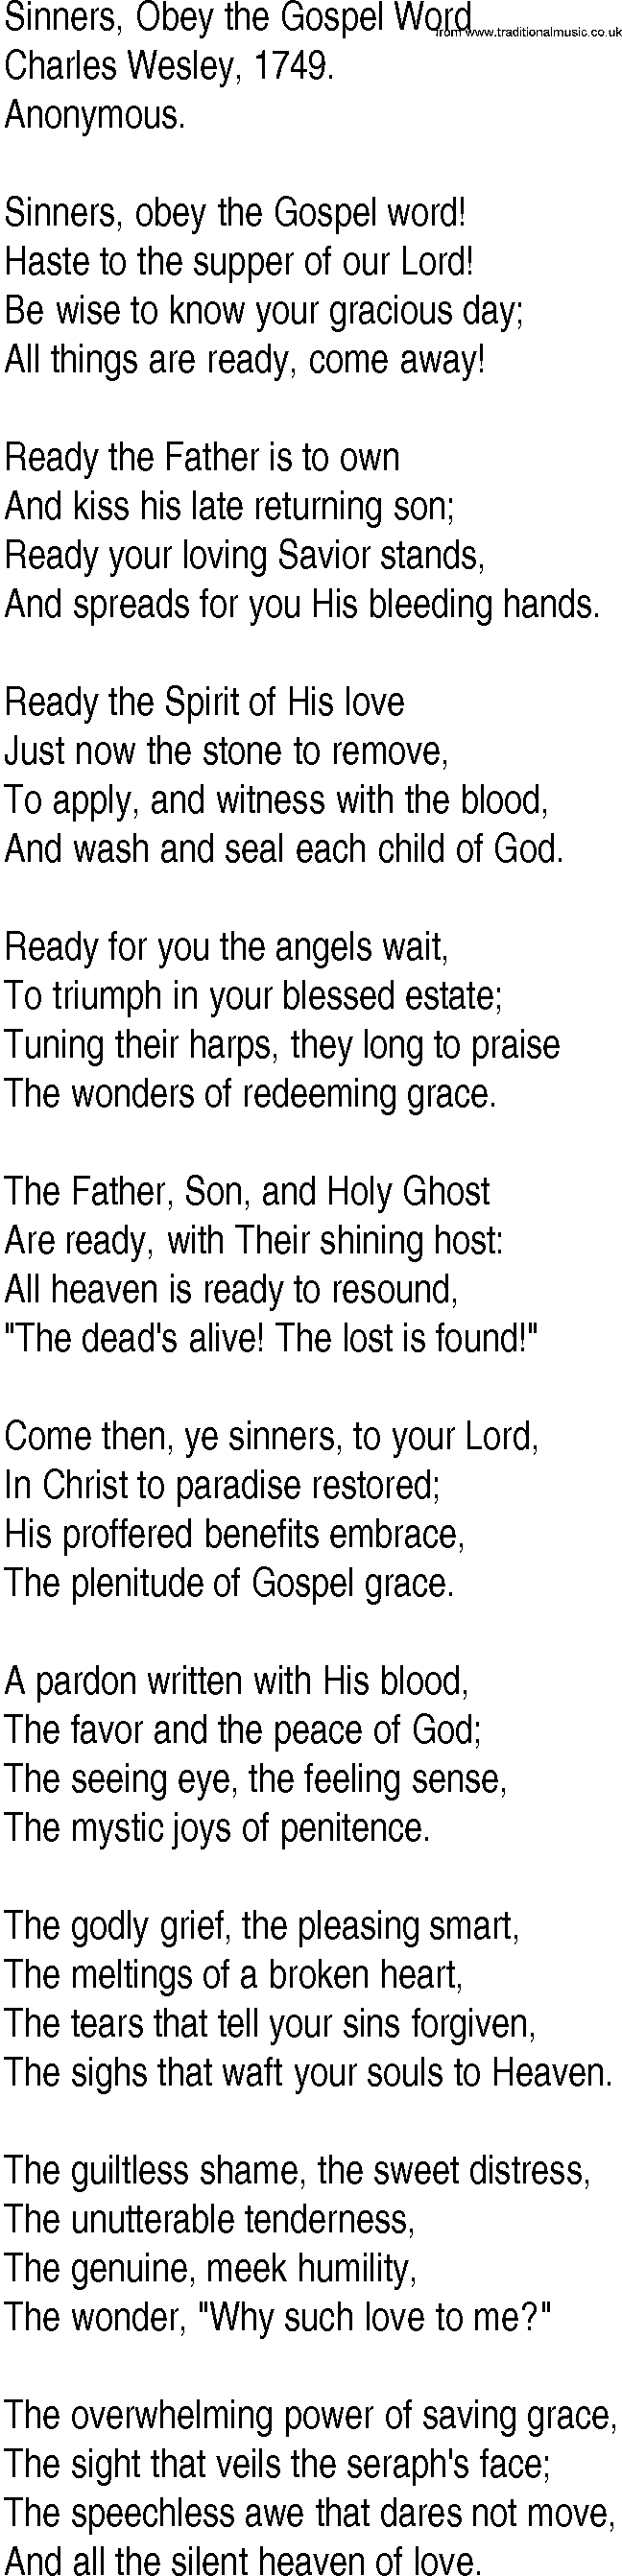 Hymn and Gospel Song: Sinners, Obey the Gospel Word by Charles Wesley lyrics